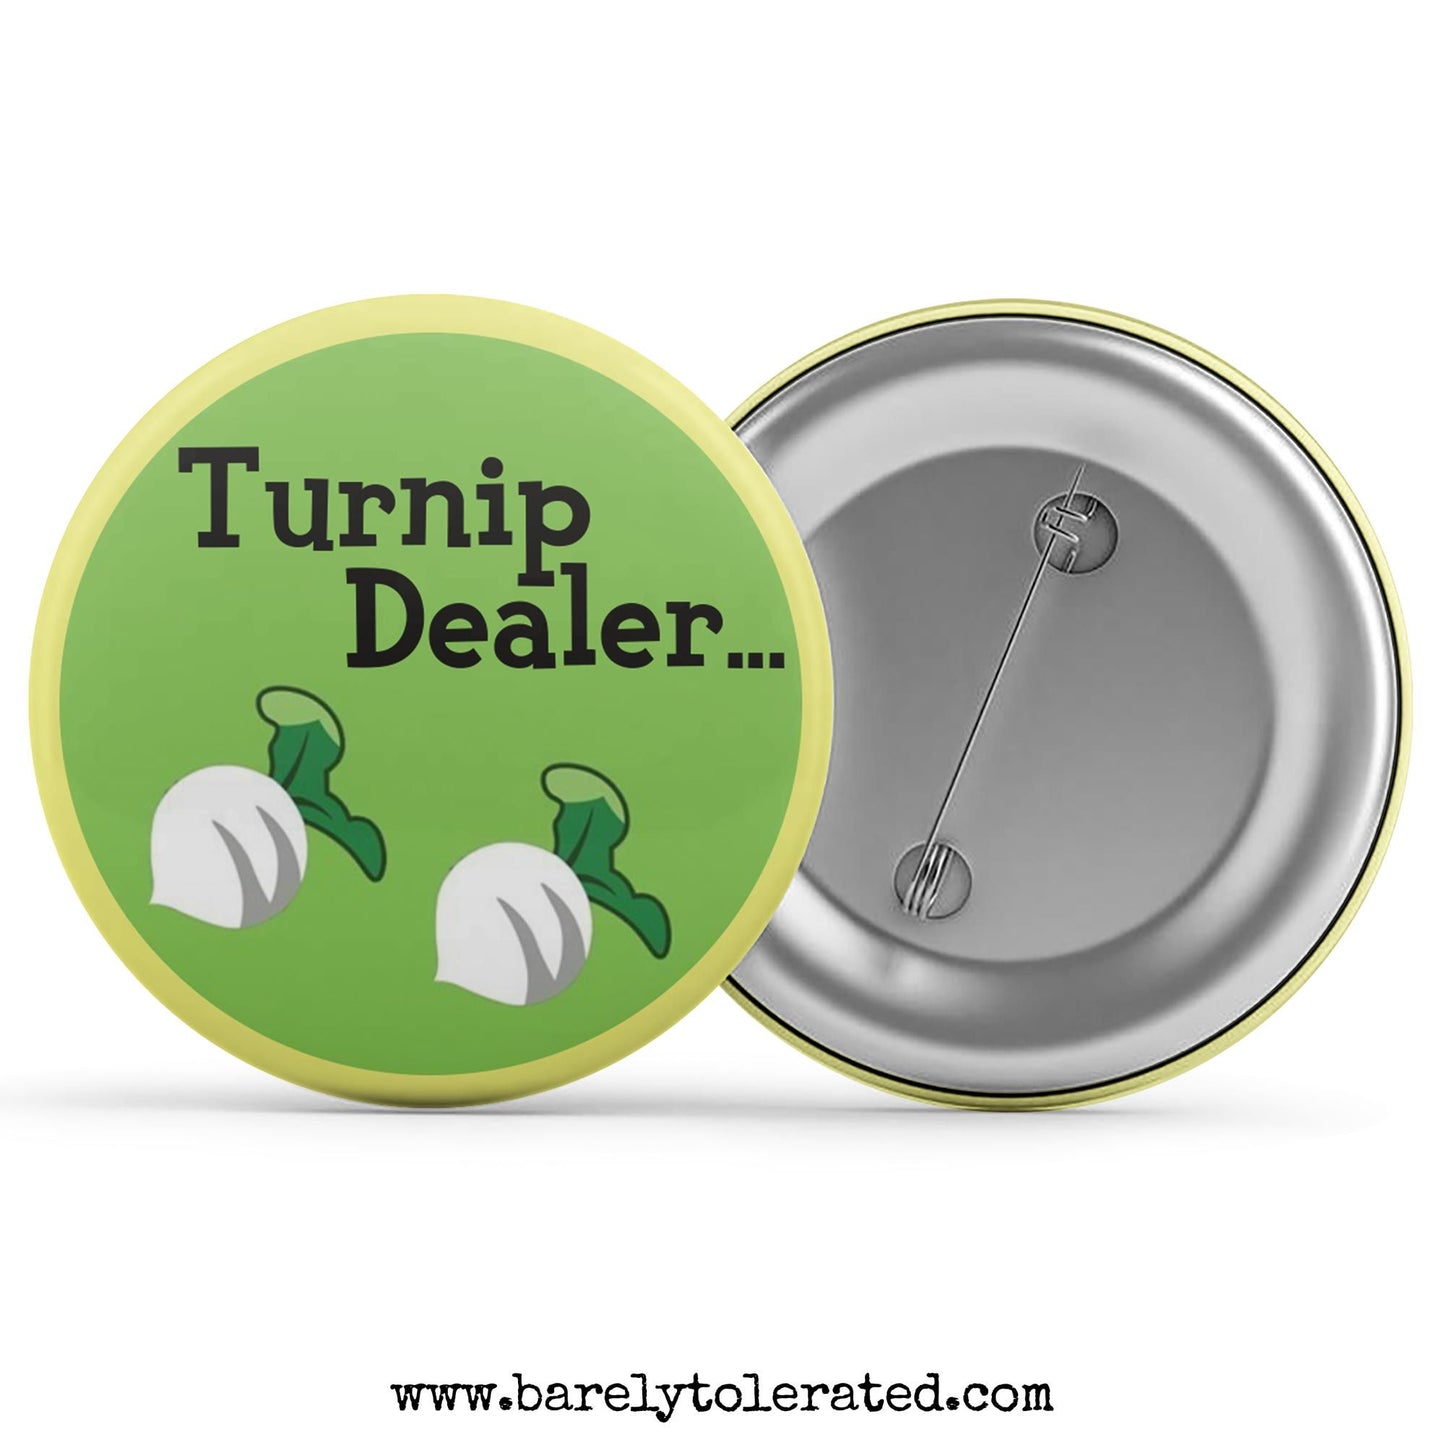 Turnip Dealer Image